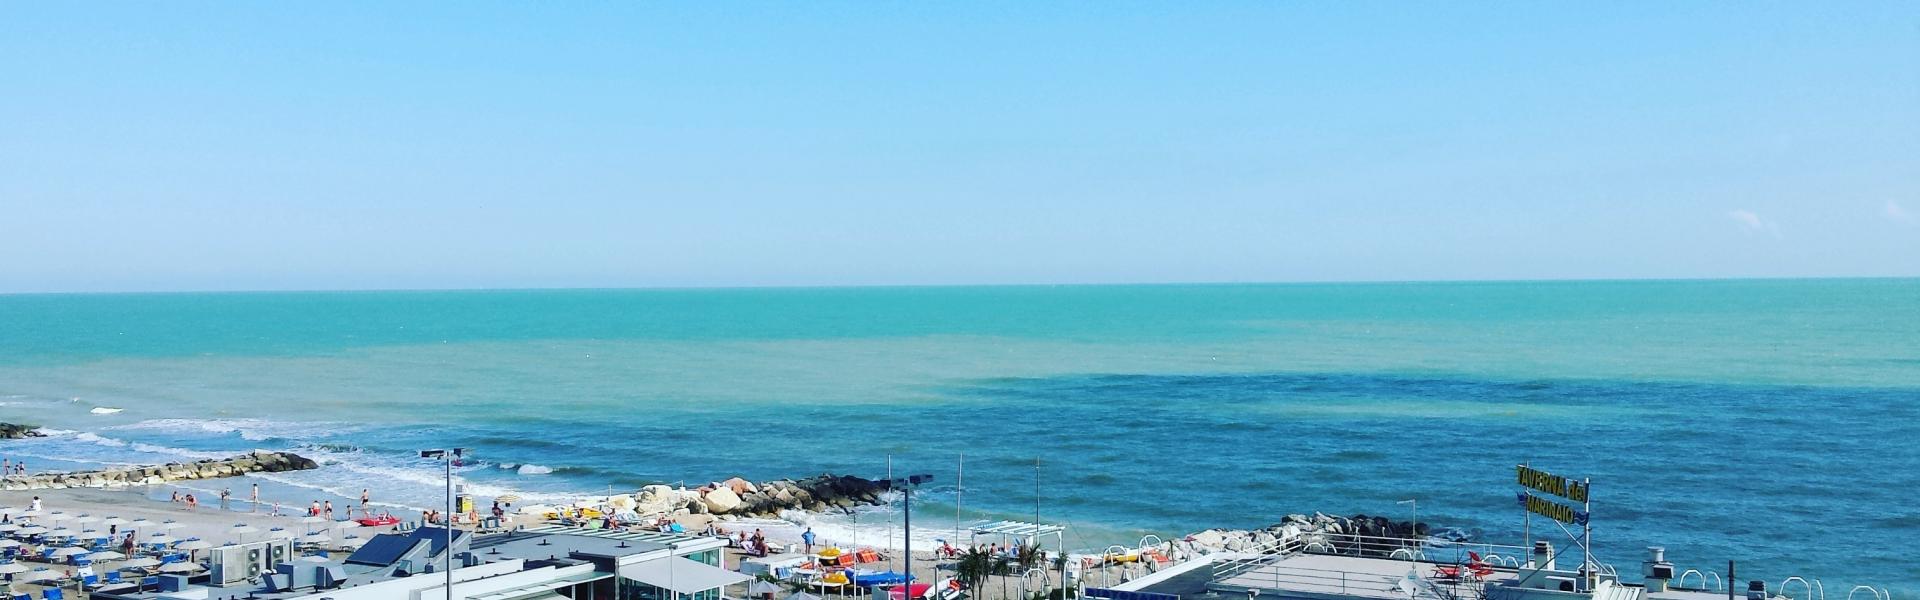 Misano Adriatico gorgeous view